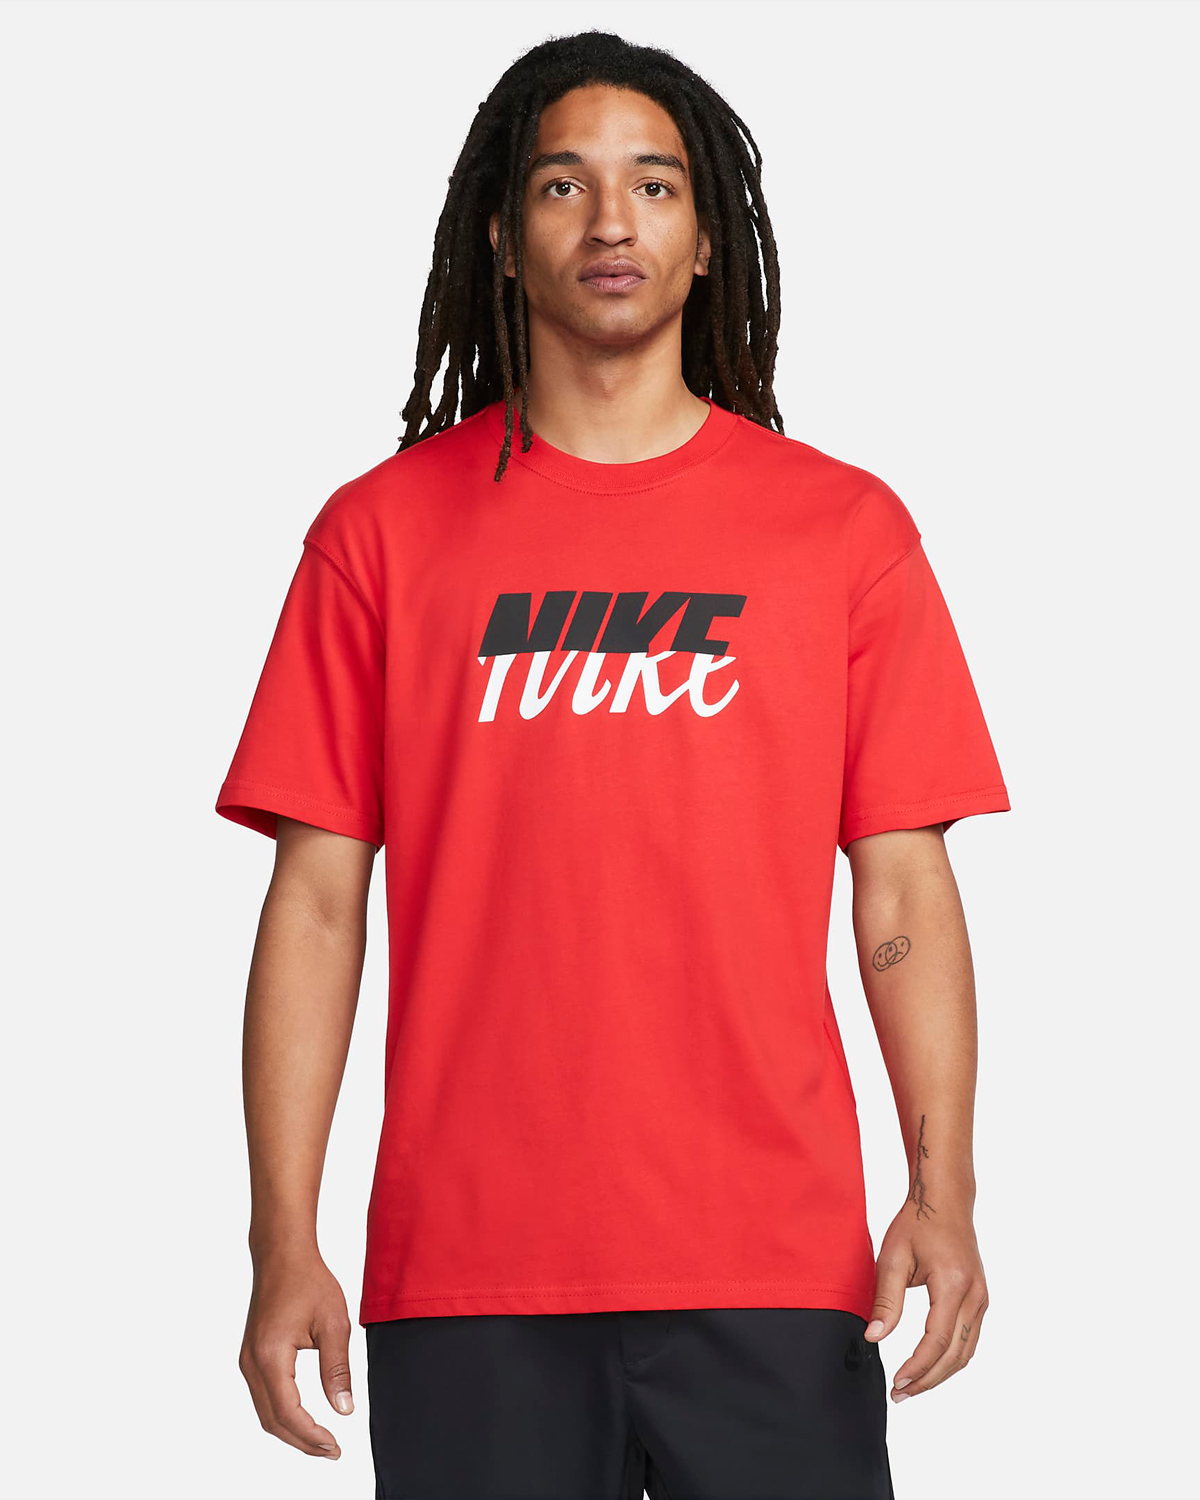 Nike-Sportswear-Split-T-Shirt-University-Red-Black-White